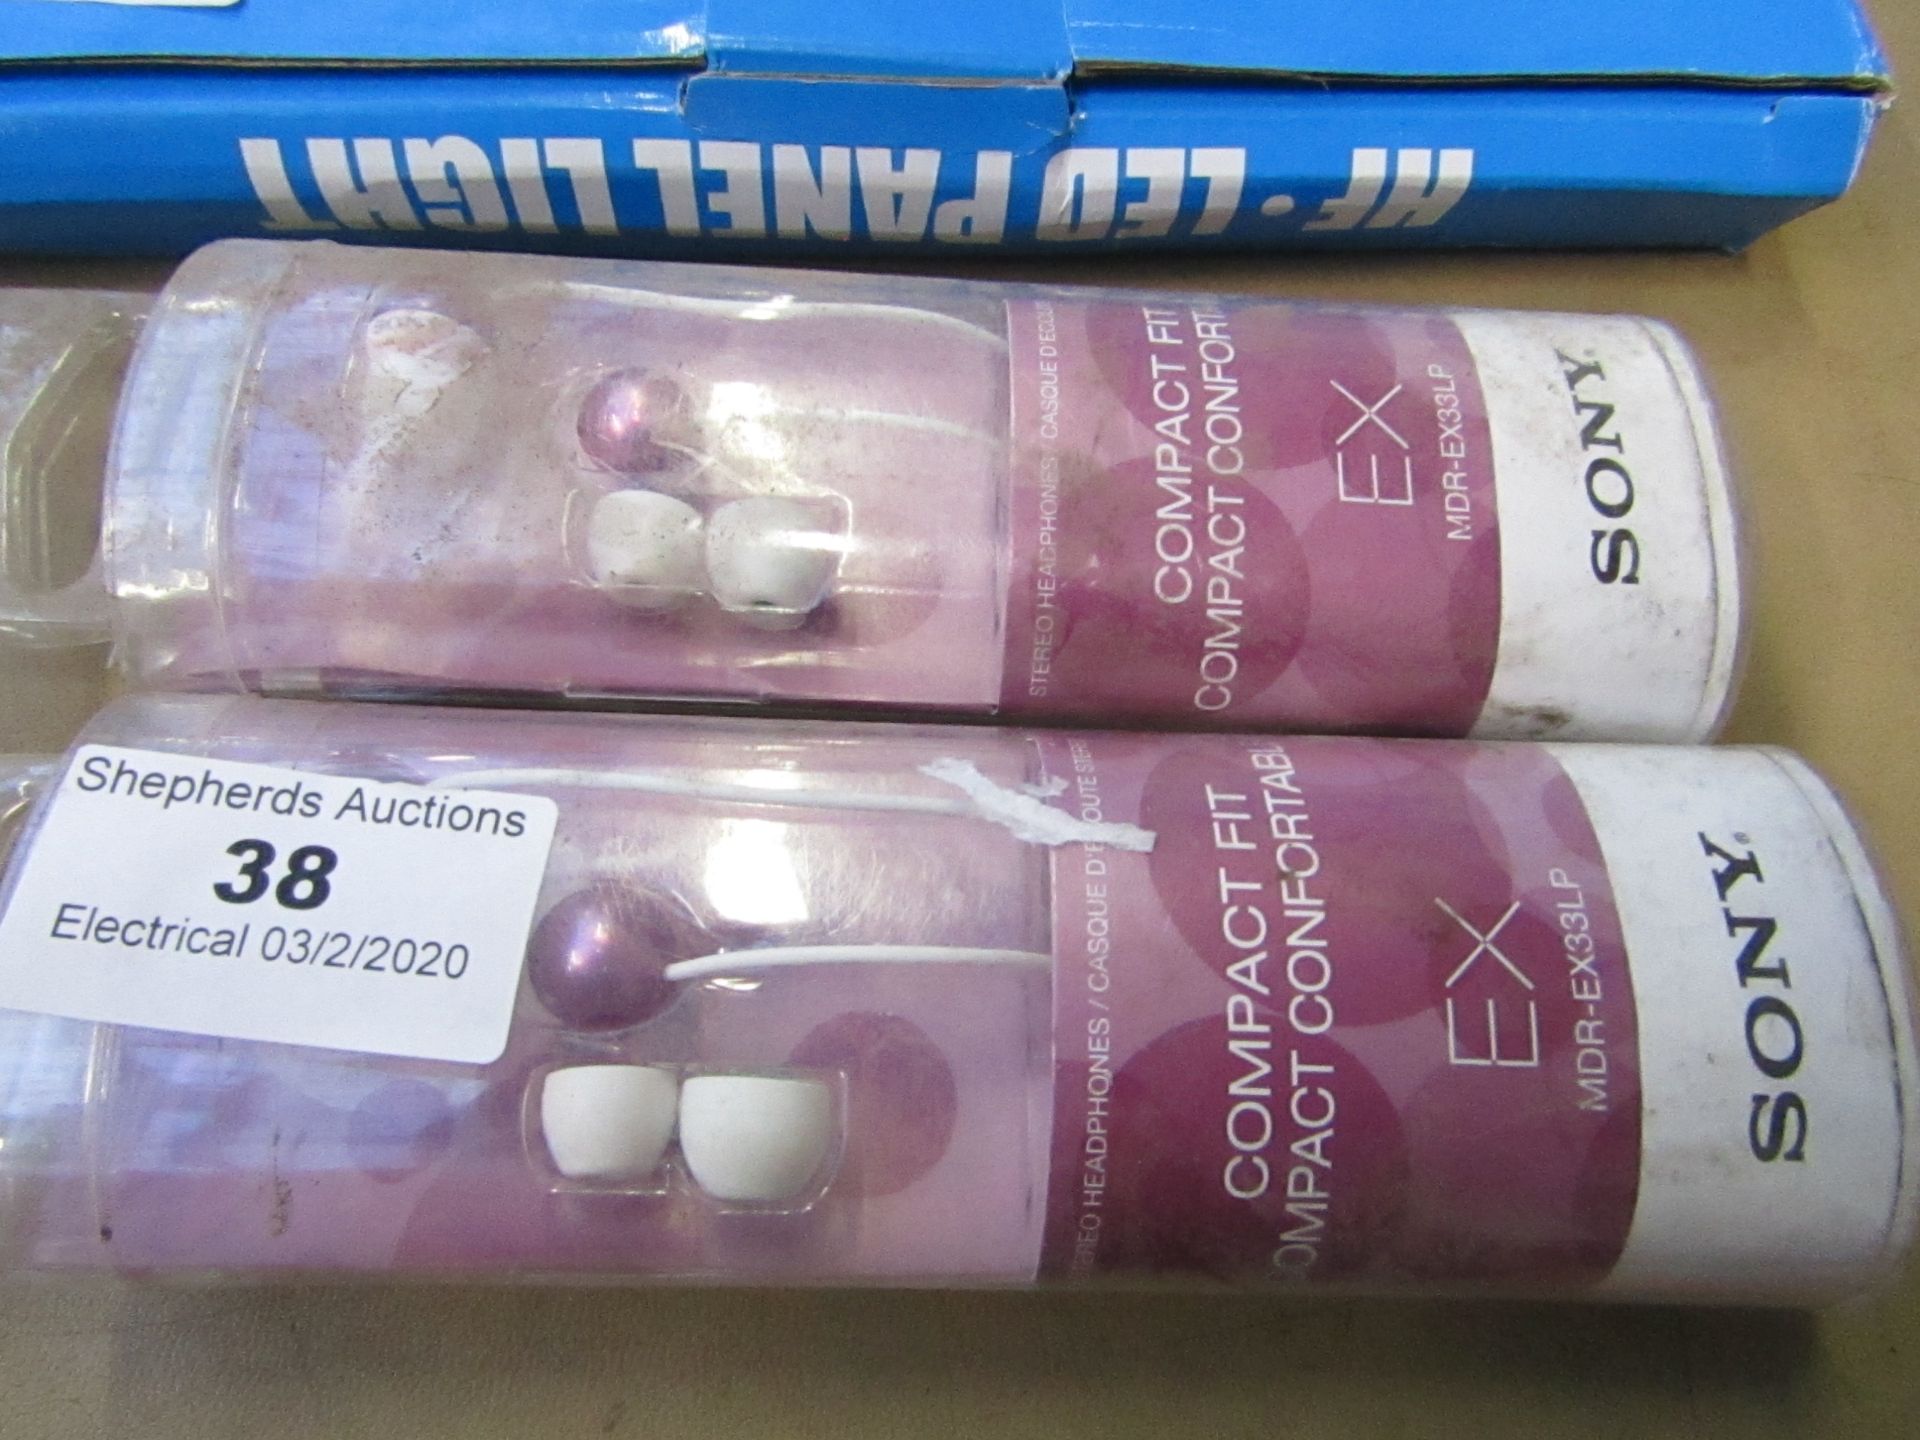 2X SONY - Earphones (pink) - packaged.